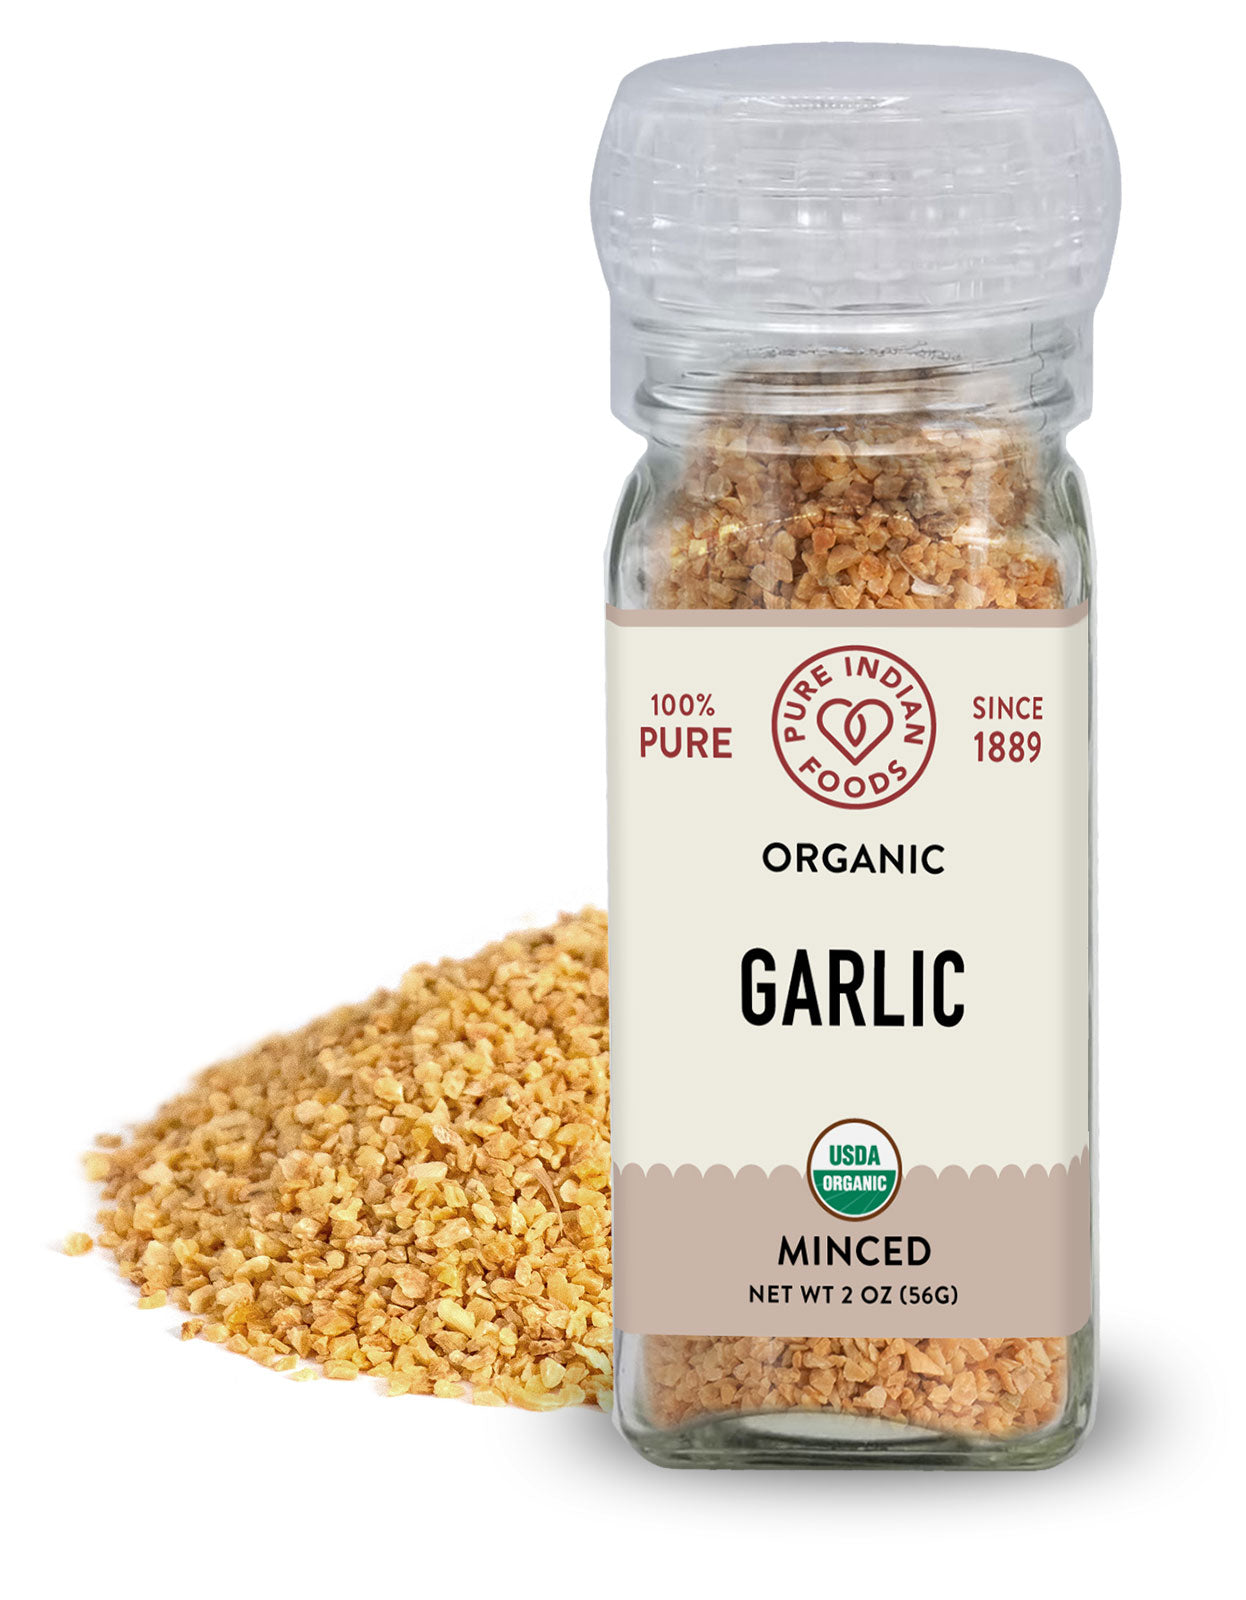 Garlic Minced, Certified Organic in Grinder Top Bottle - 2 oz